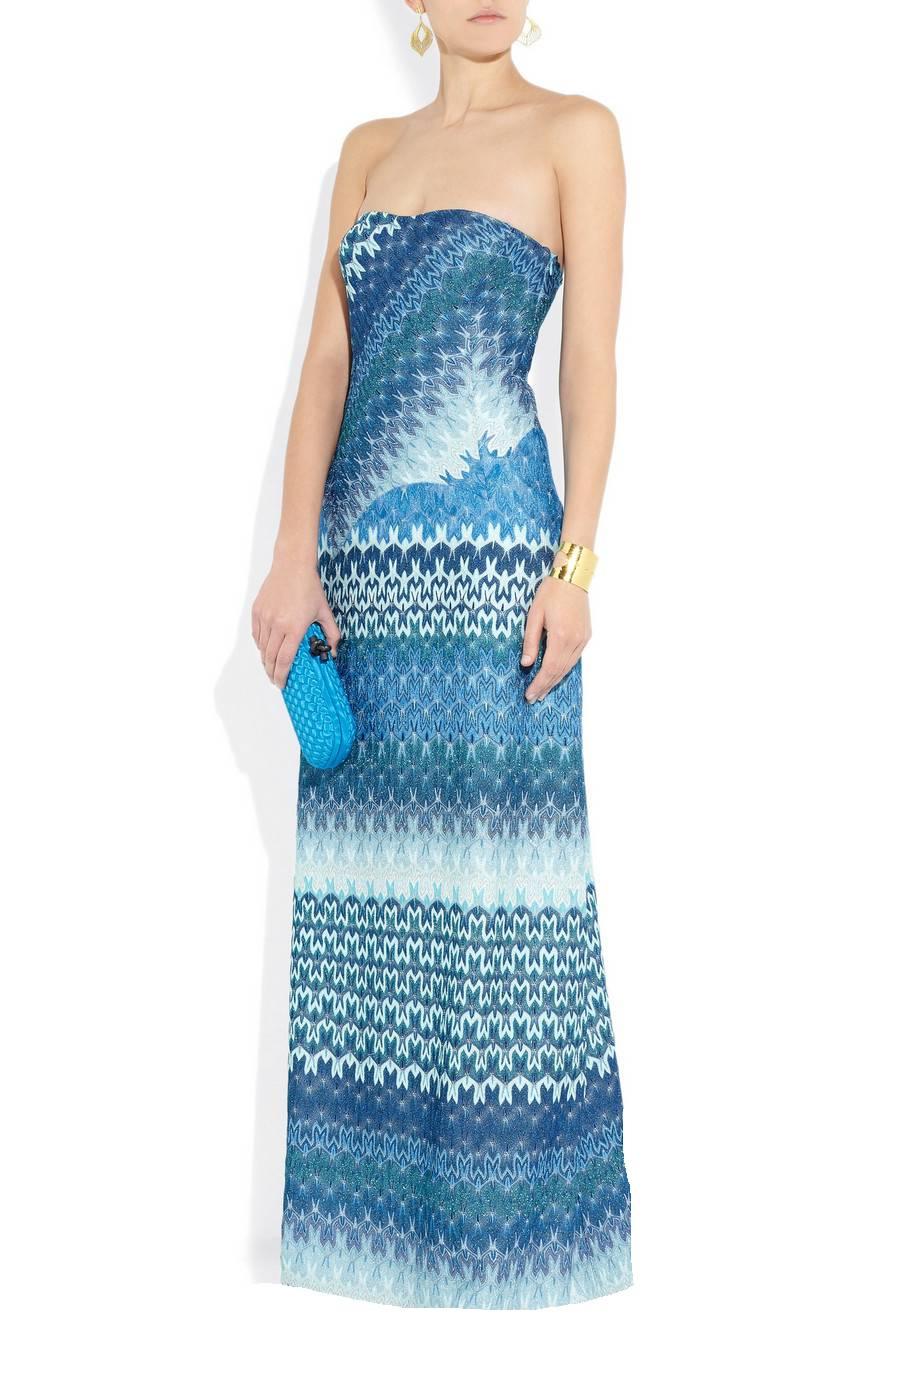 Missoni Metallic Seafoam Blue Crochet Knit Corset Evening Gown 2